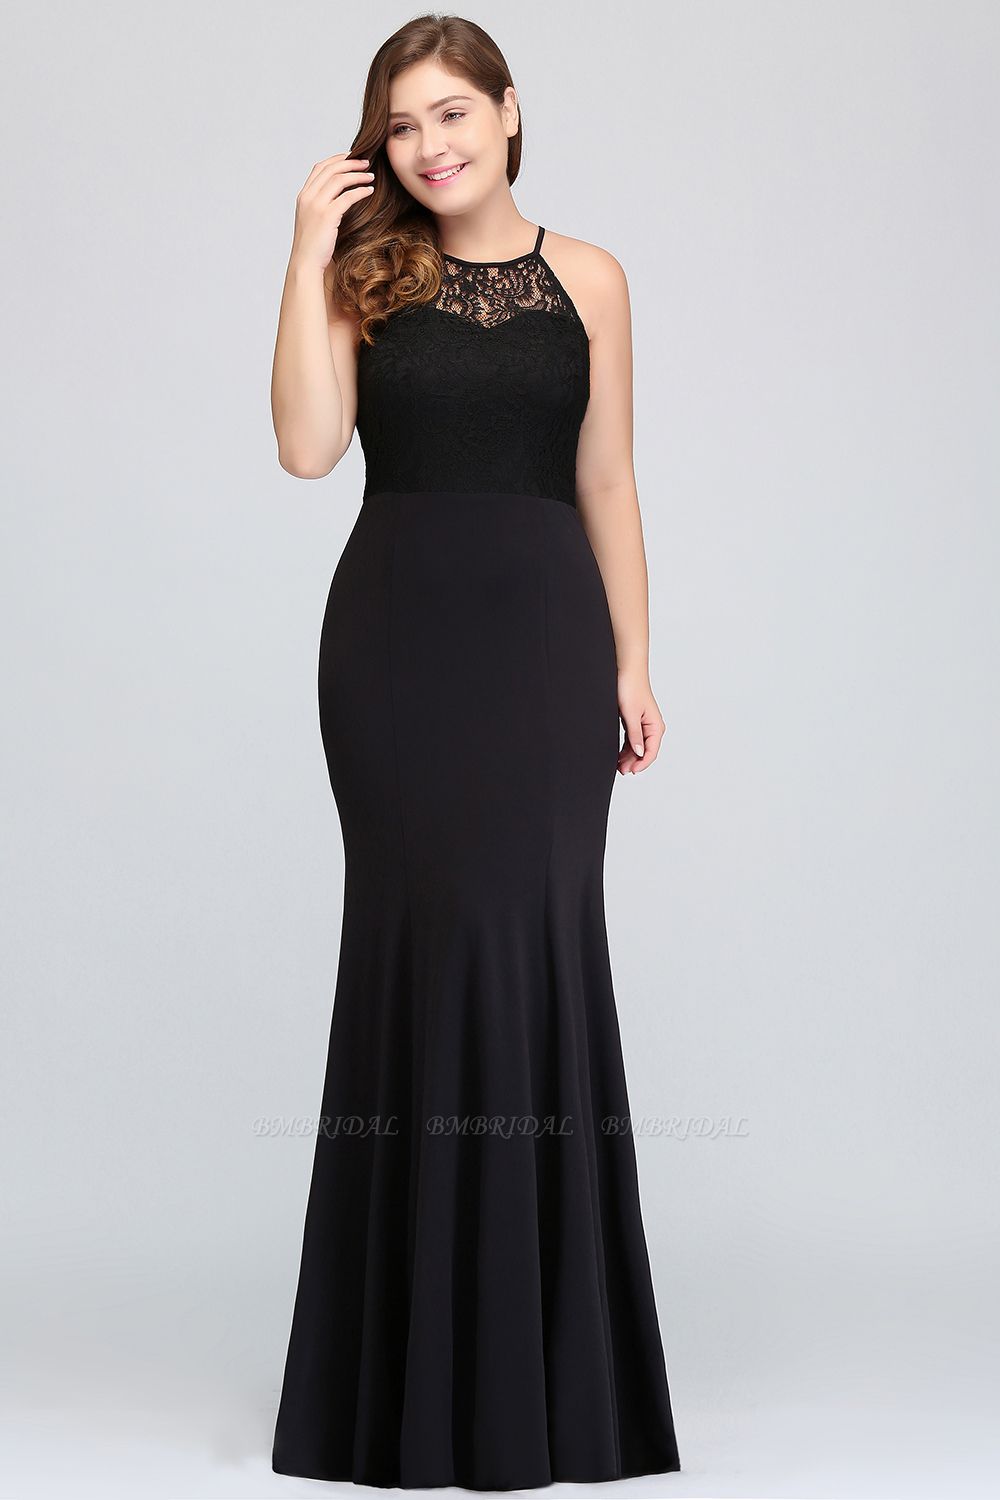 BMbridal Plus Size Mermaid Jewel Lace Black Bridesmaid Dress Online